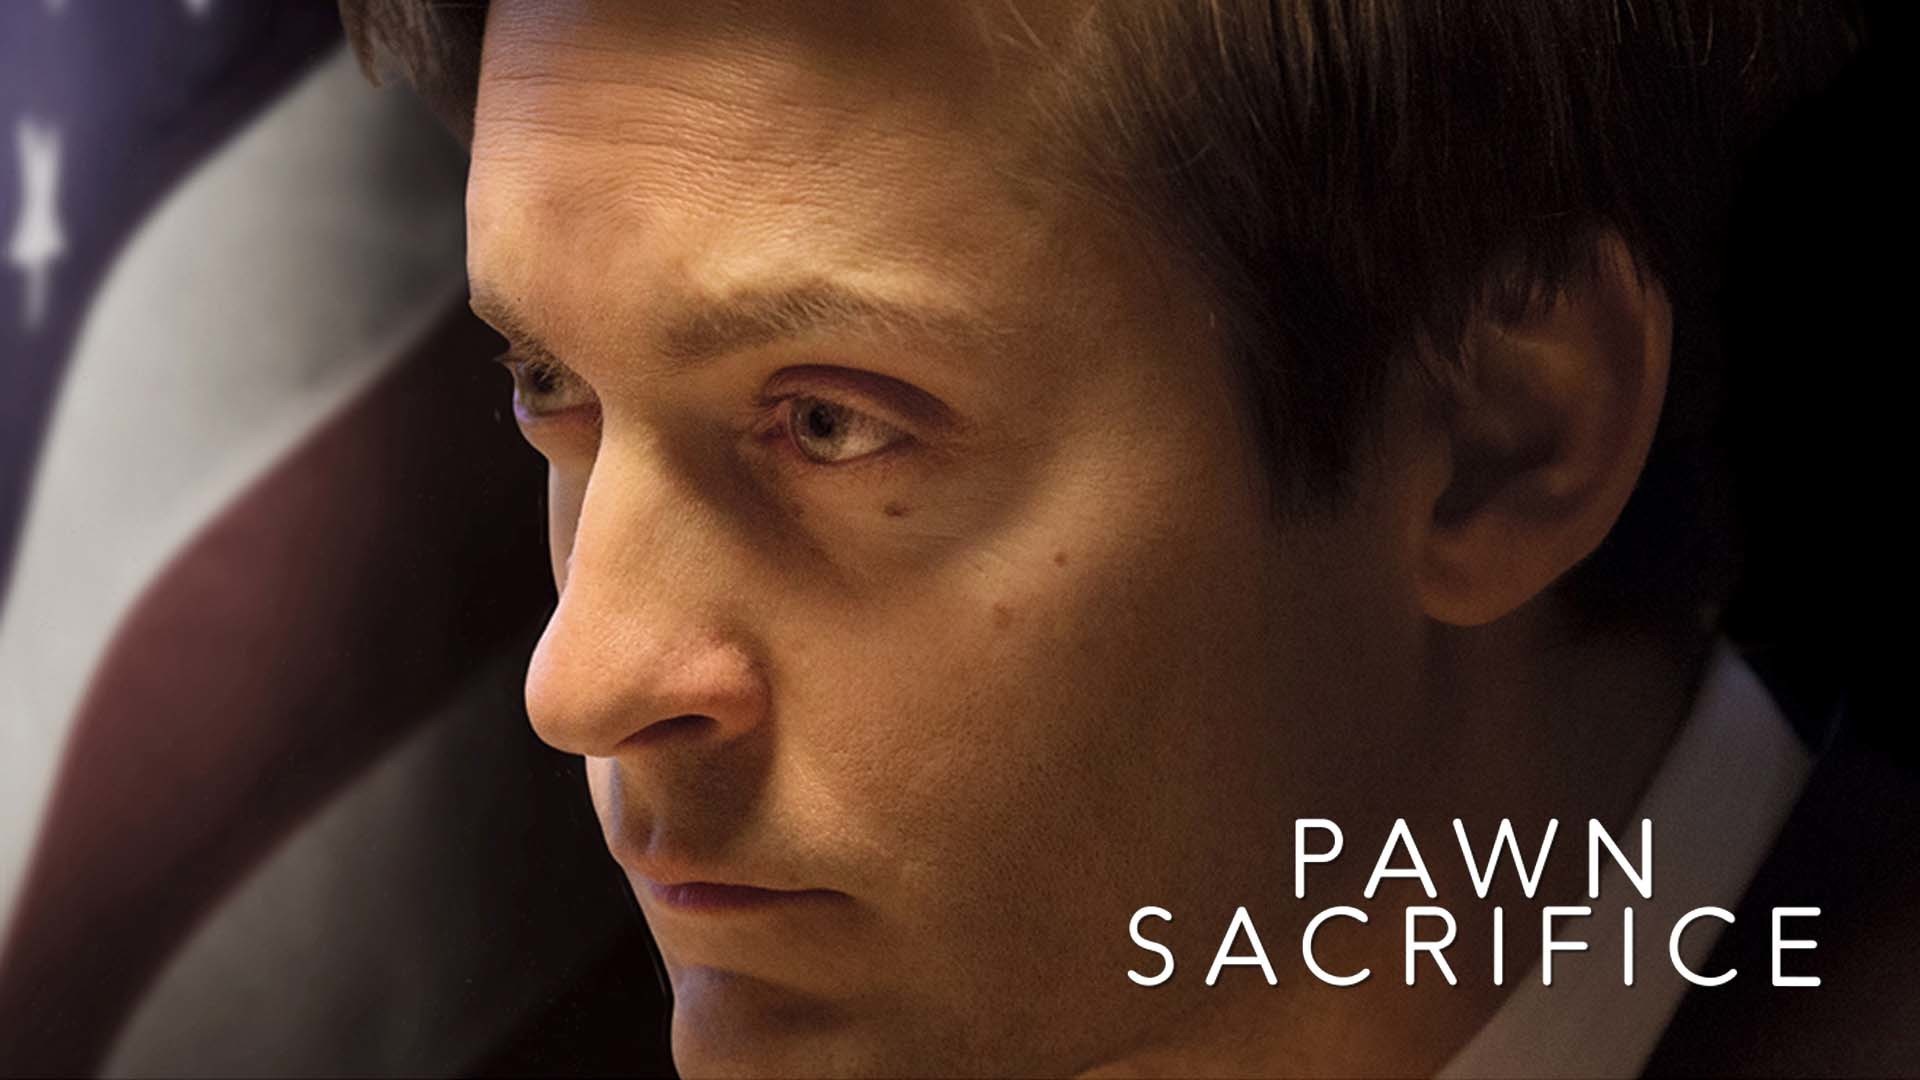 pawn-sacrifice-burg-kino-wien-vienna-original-versions